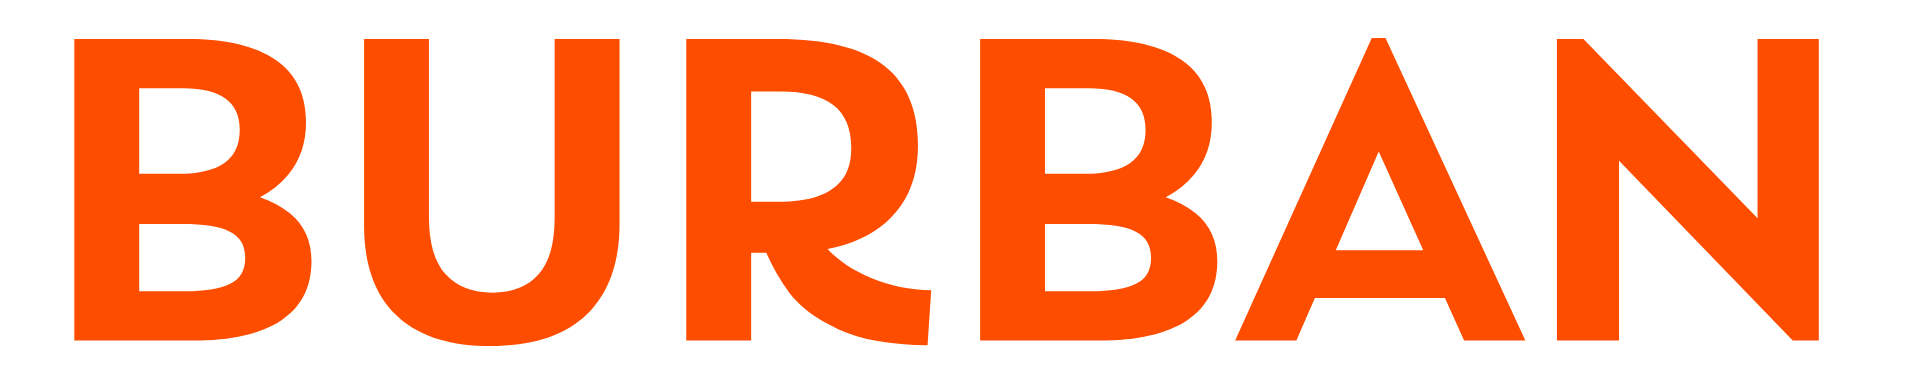 burban branding logo